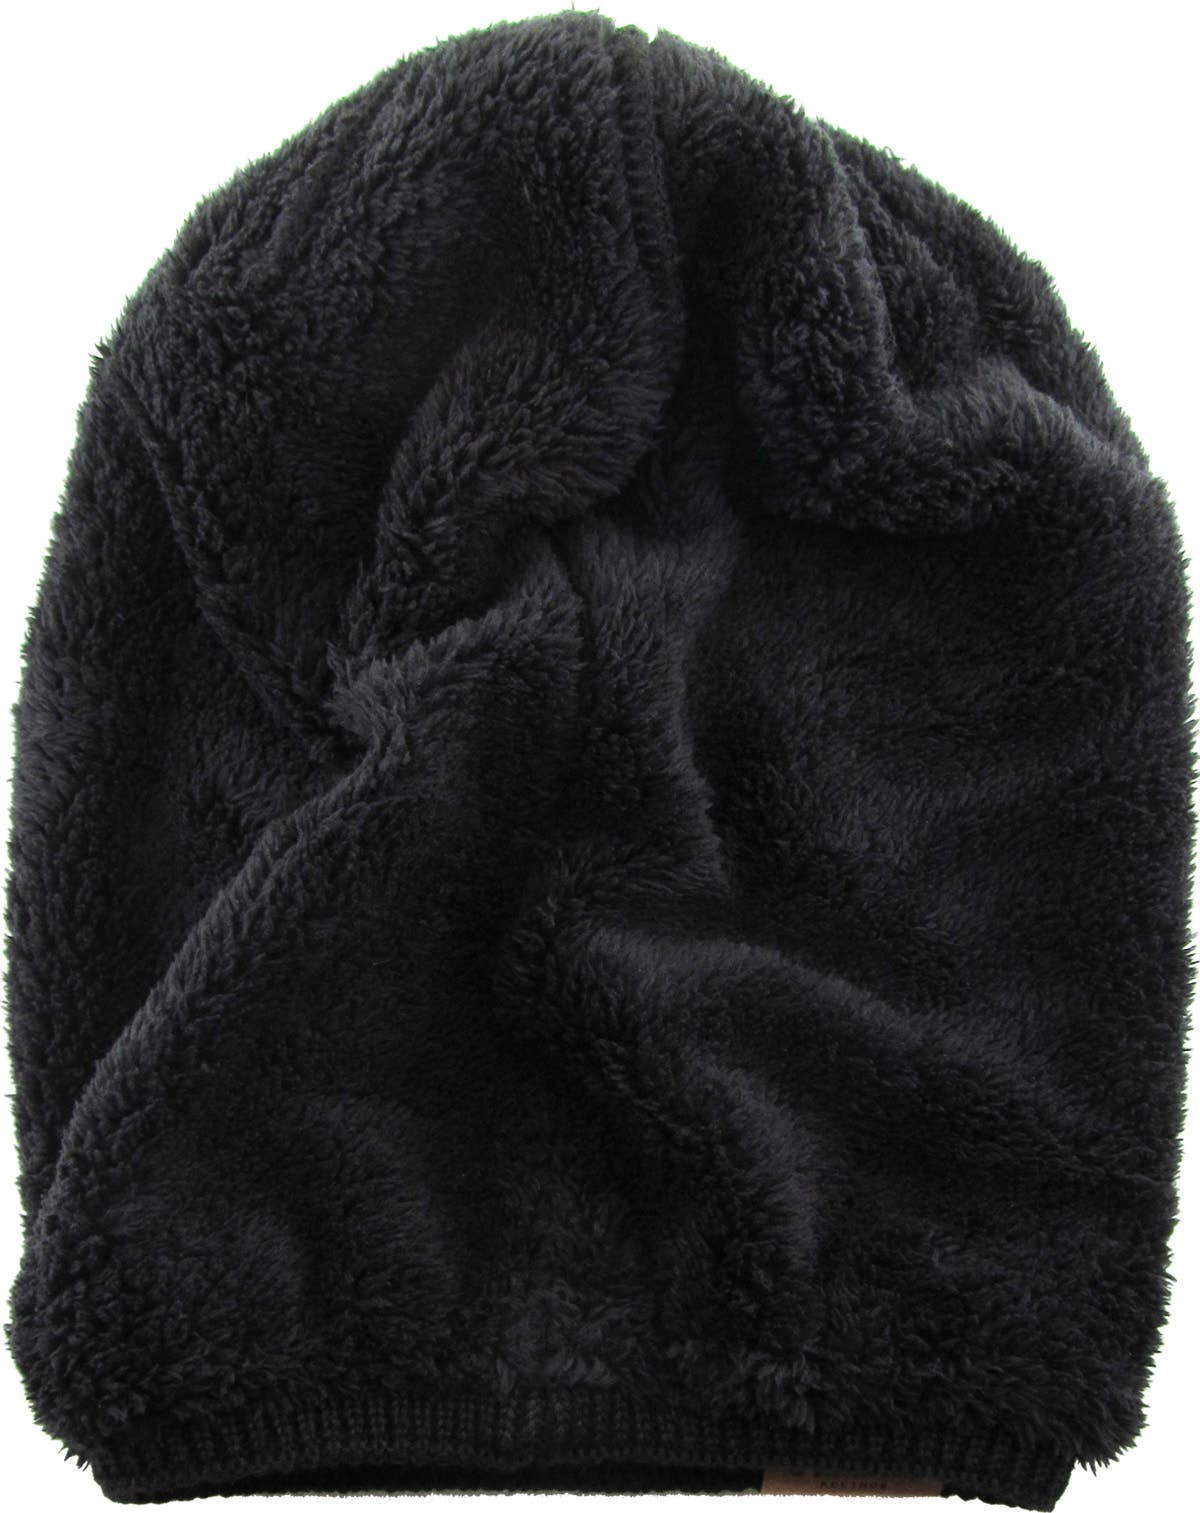 KBETHOS Thick Oversized Slouch Beanie Sherpa Fleece Lined: BLK